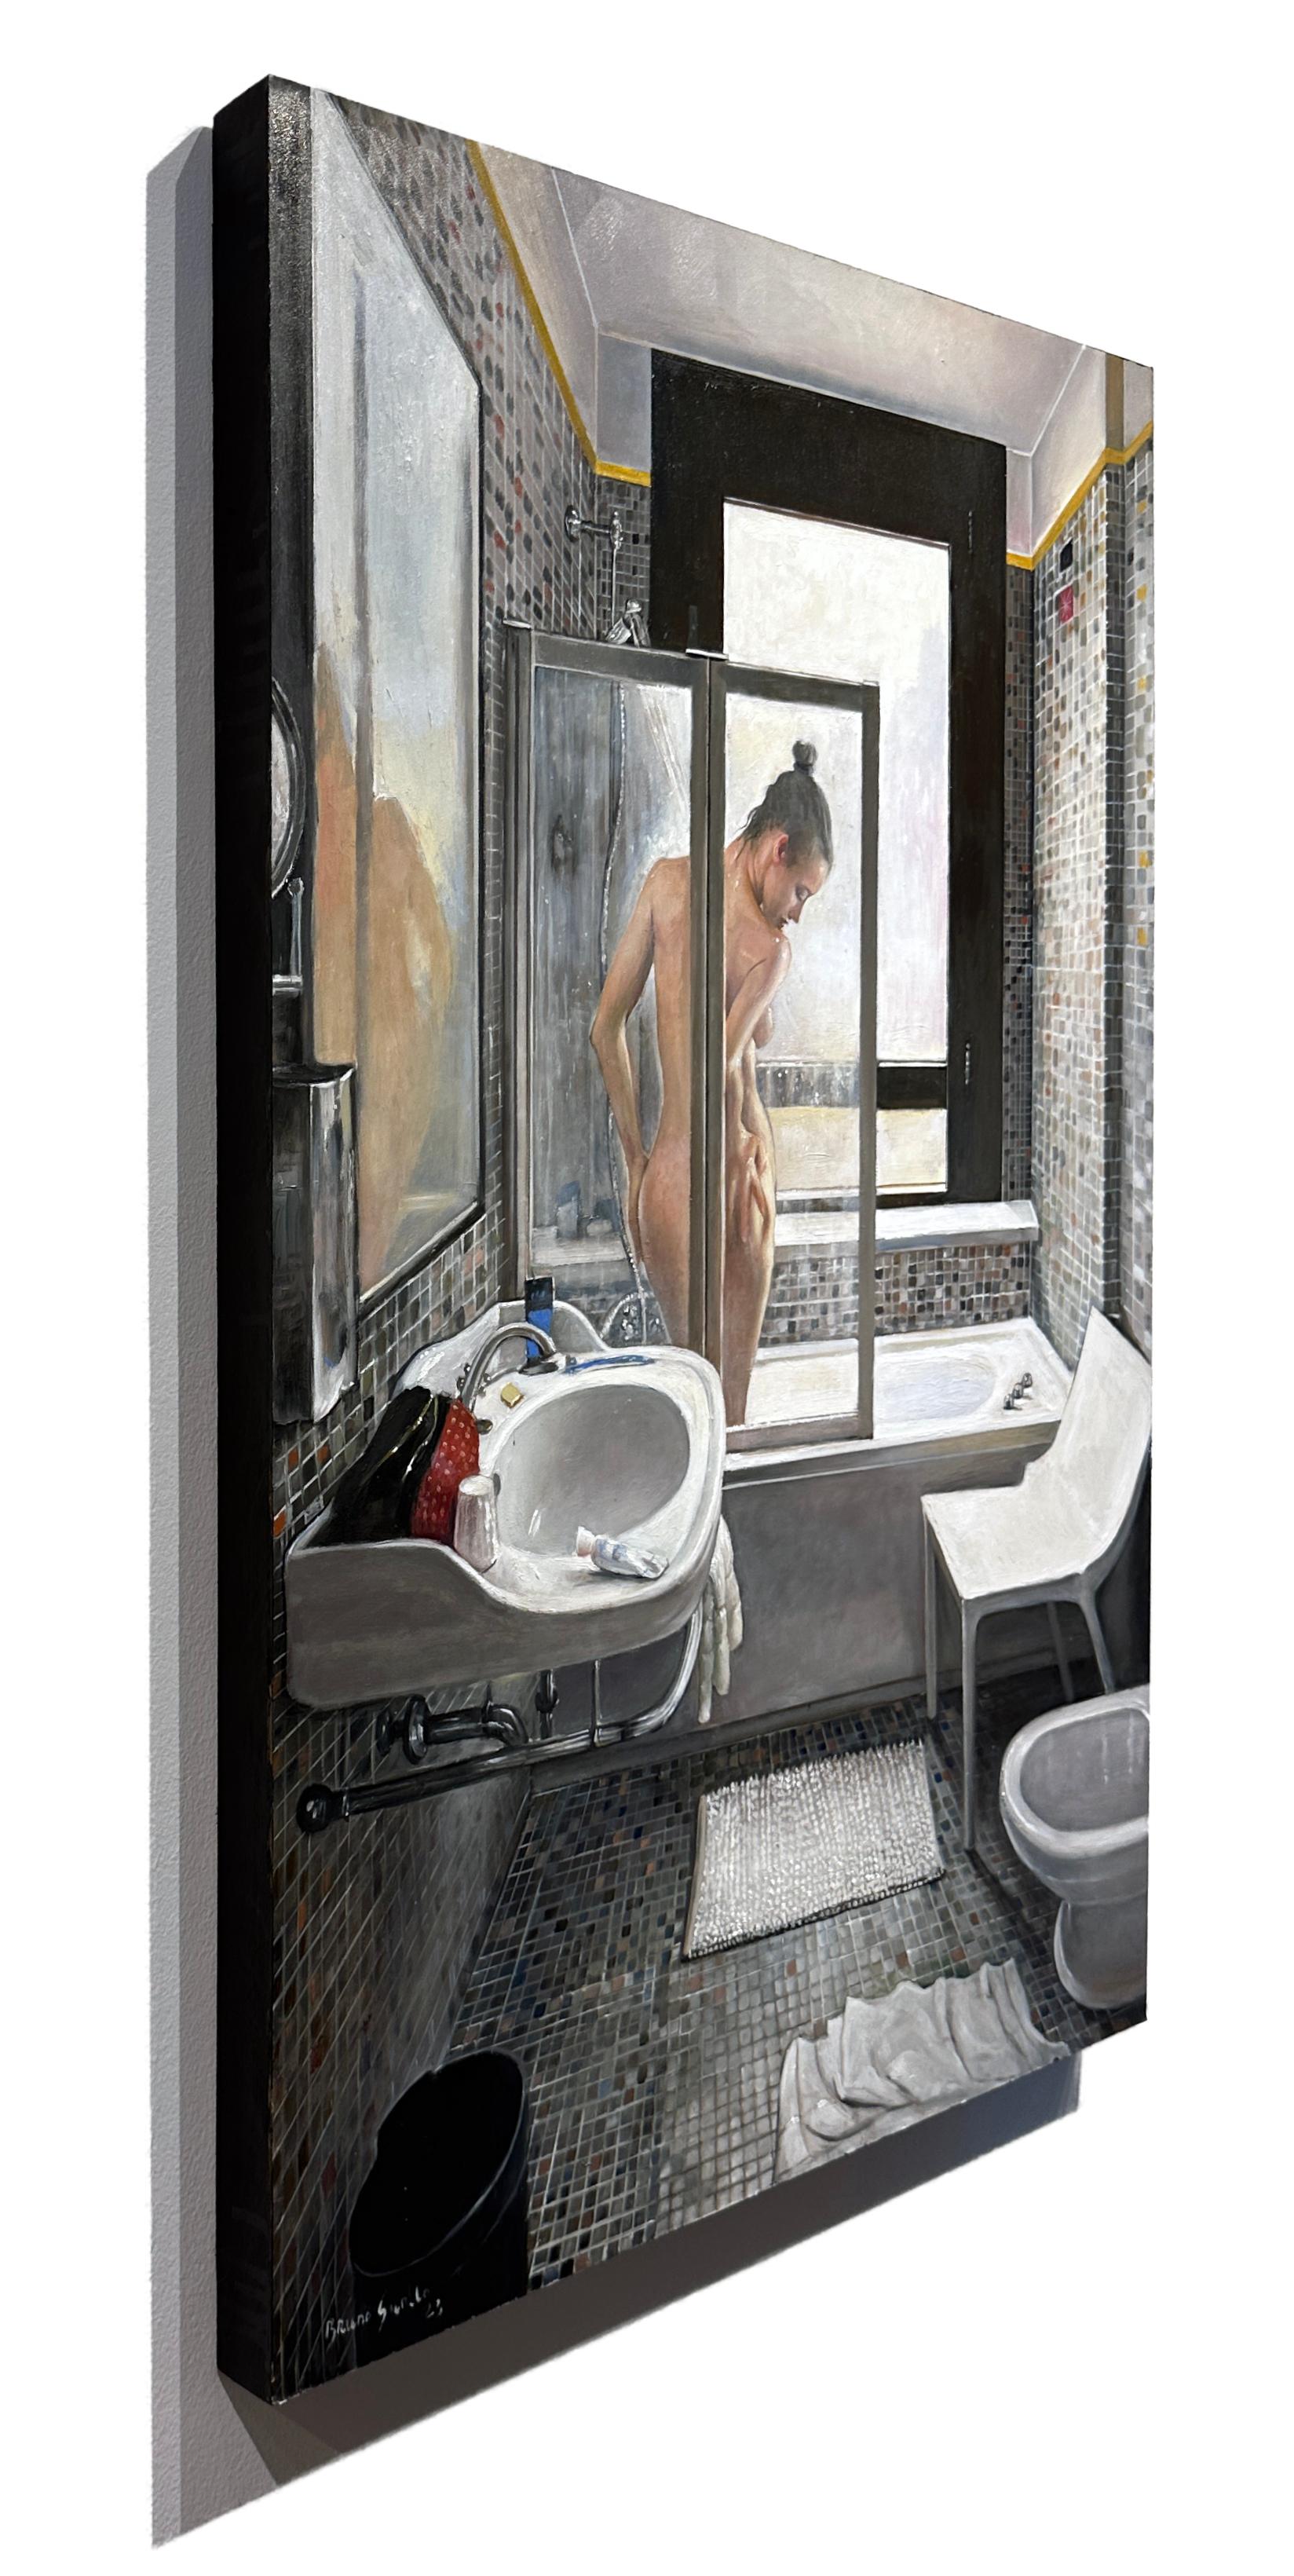 Venetian Shower -  Nude Woman Showering in Tiled Bath, Original Oil Painting - Gray Nude Painting by Bruno Surdo